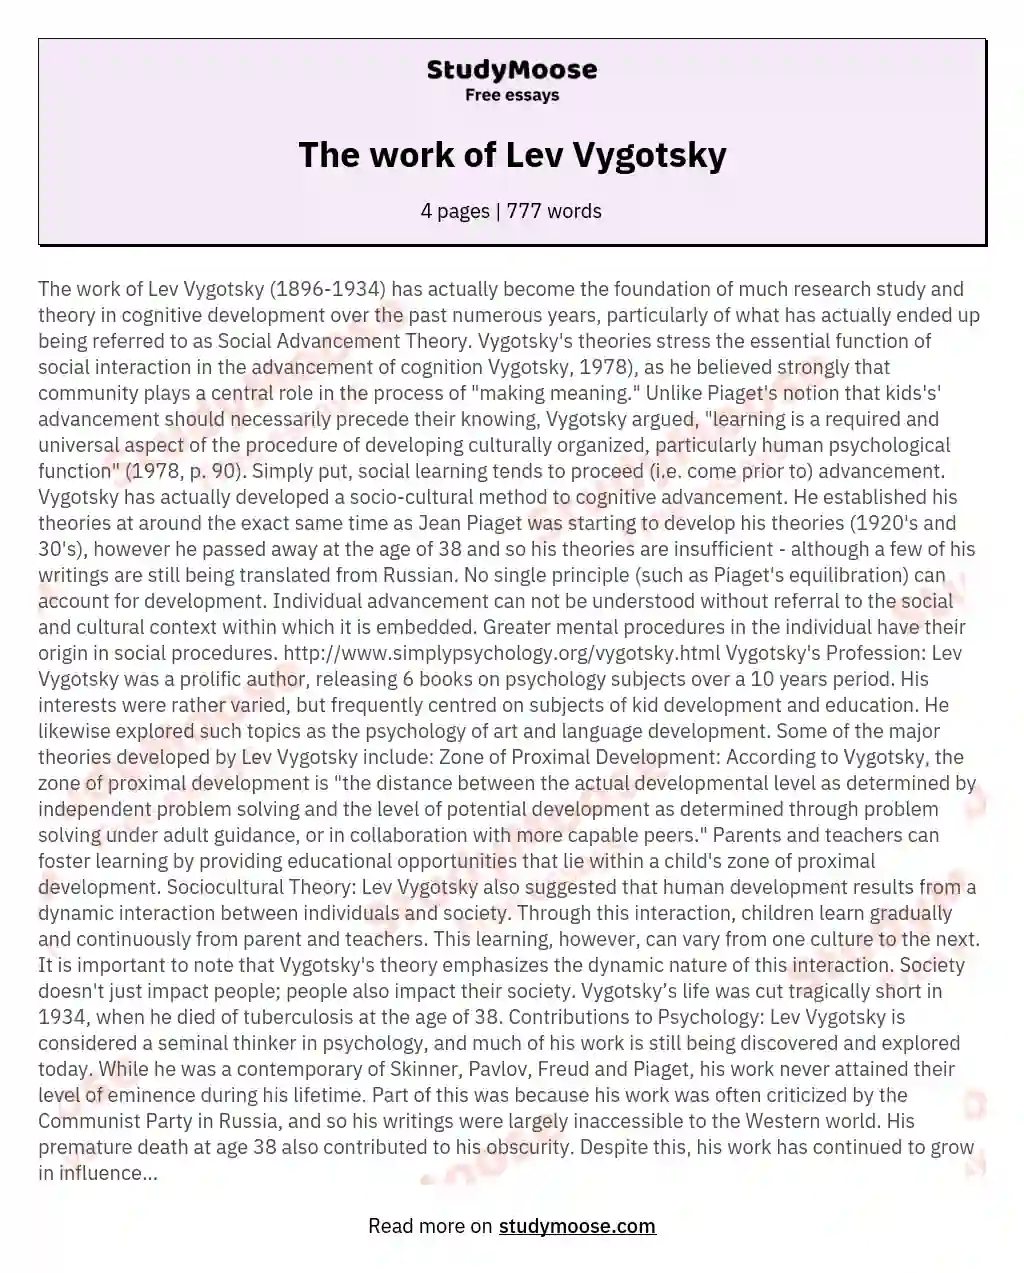 The work of Lev Vygotsky essay